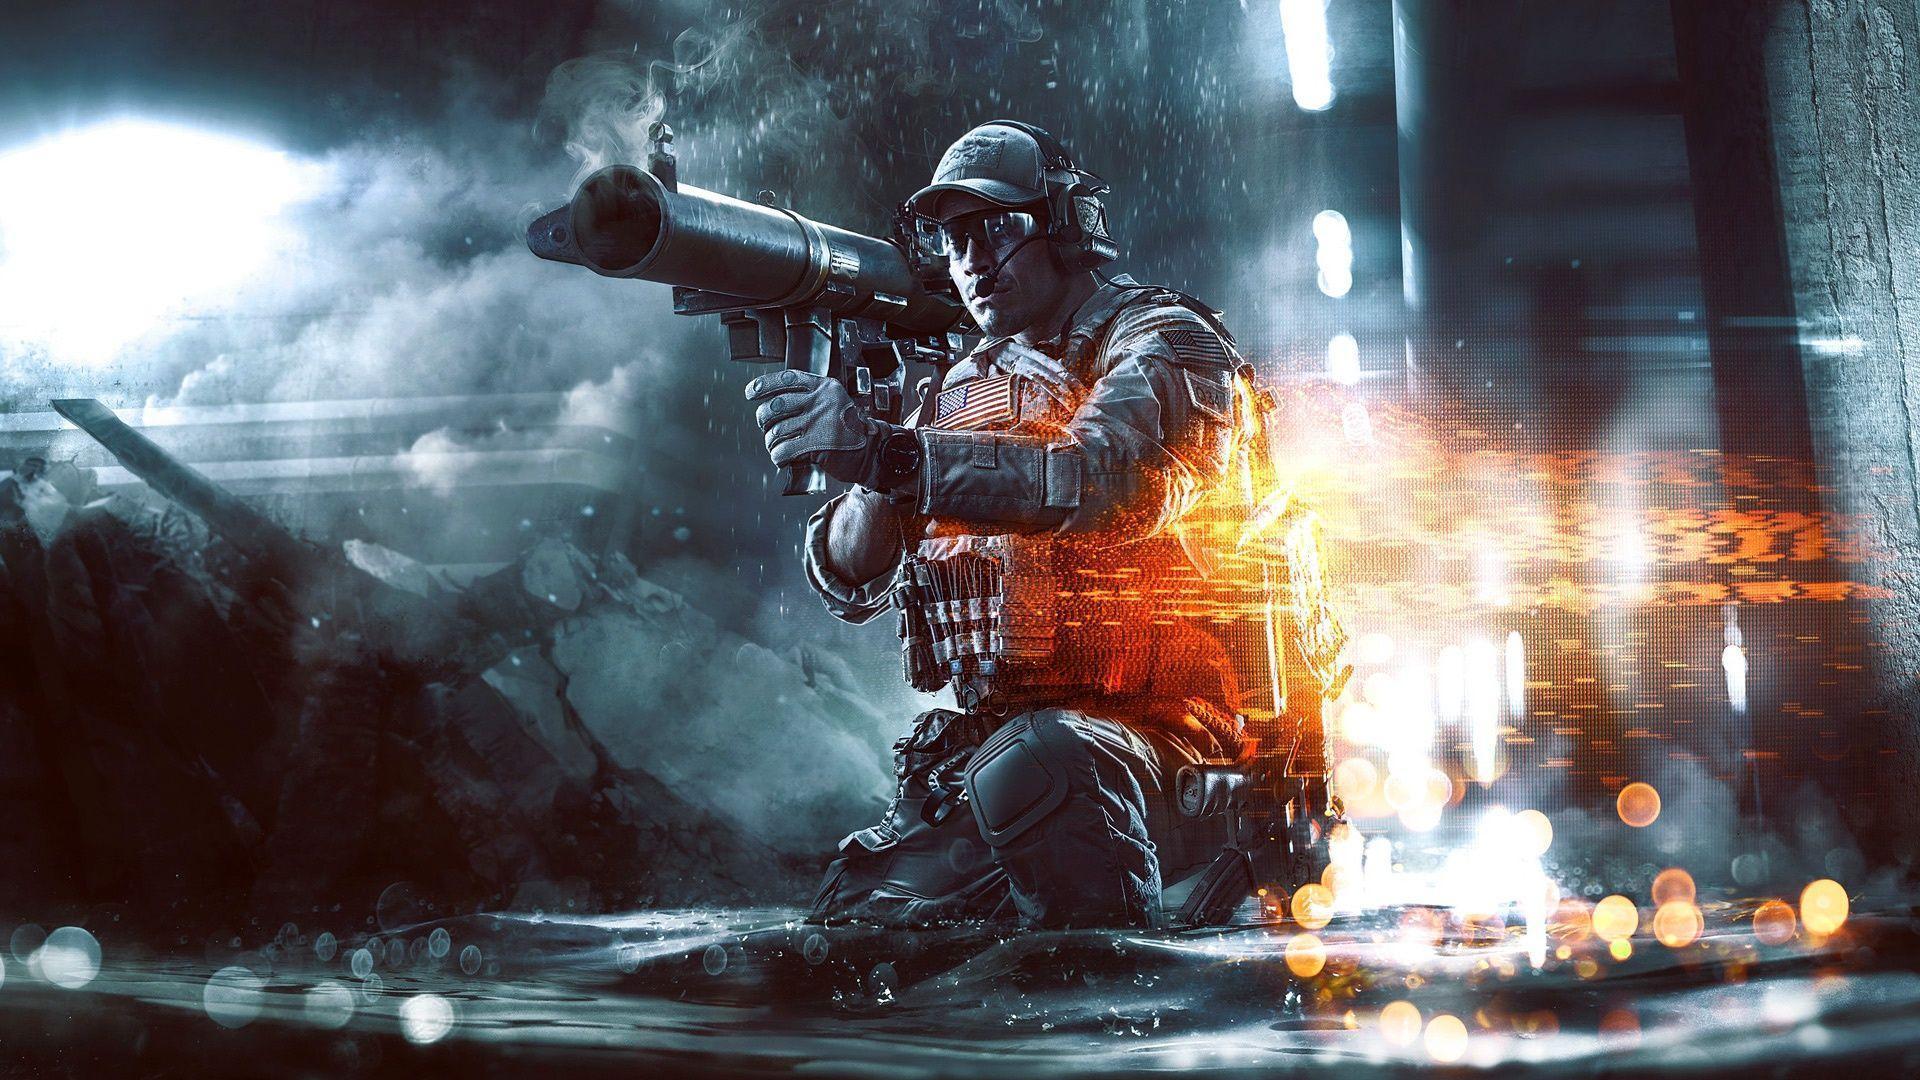 Battlefield 4 Wallpaper